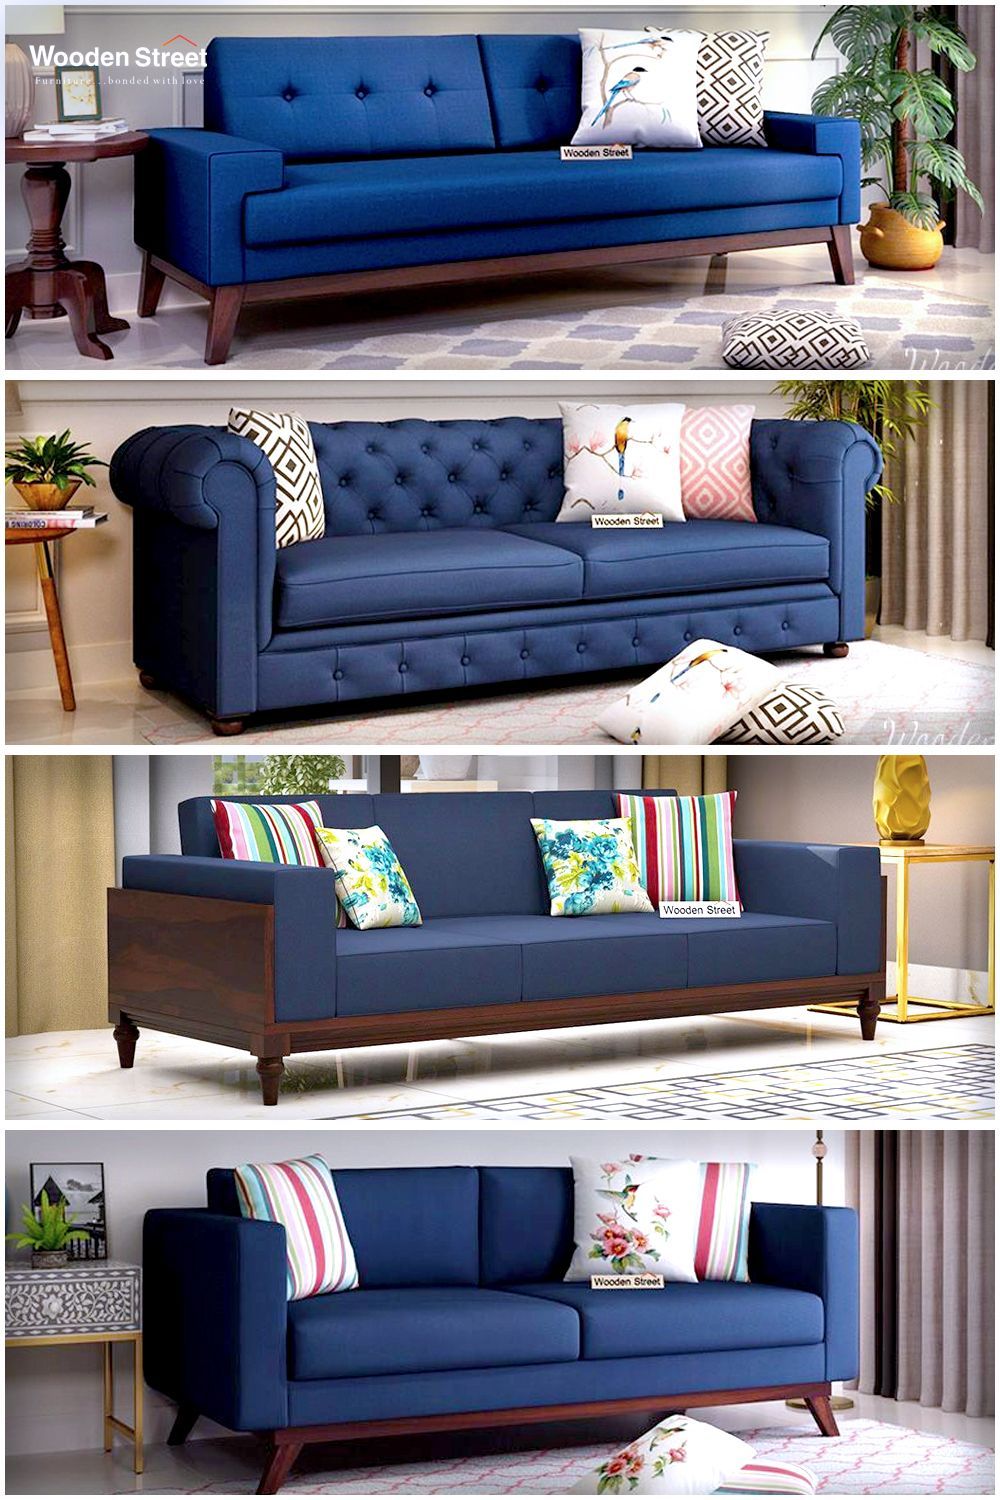 3 Seater Sofa | Wooden Sofa Designs, Sofa Bed Design, Sofa Table Decor Inside Modern 3 Seater Sofas (Photo 13 of 15)